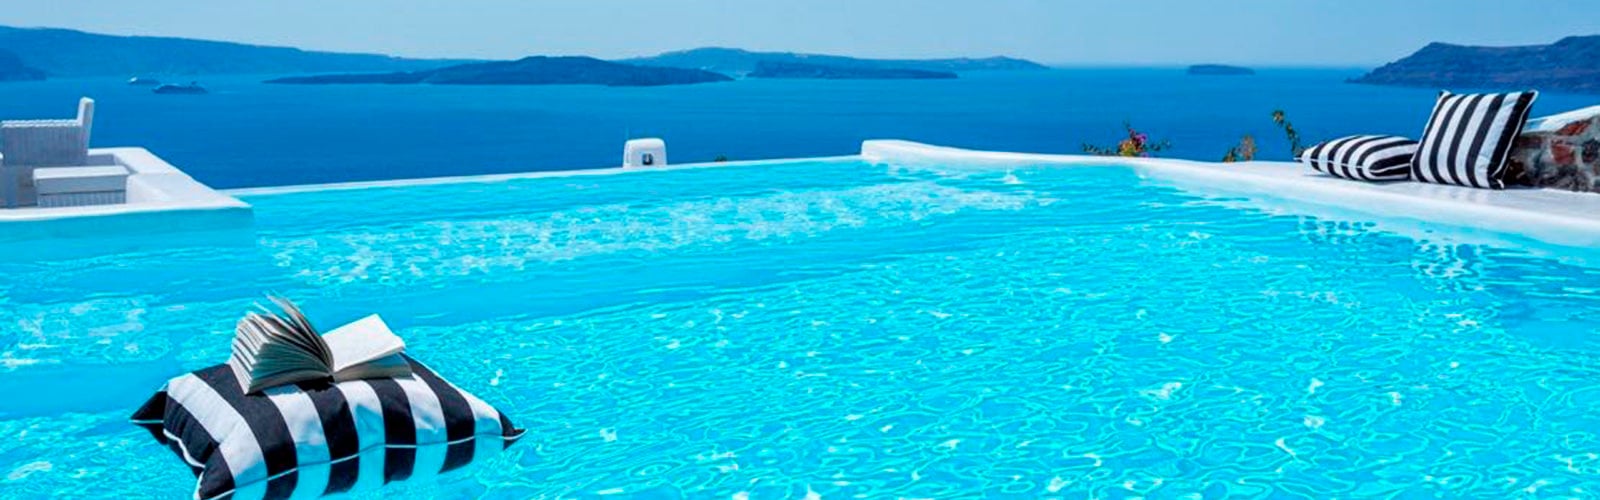 Canaves Oia Hotel Pool, Santorini, Greece